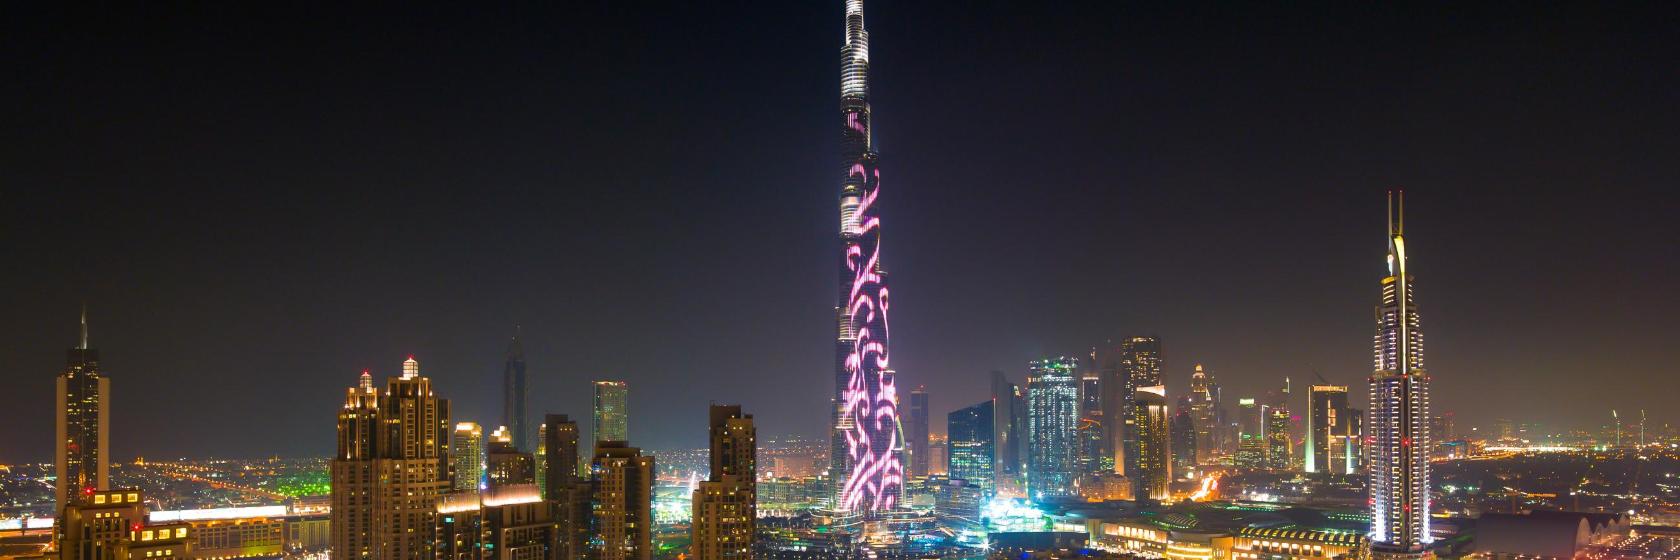 The 10 best hotels near Burj Khalifa in Dubai, United Arab Emirates